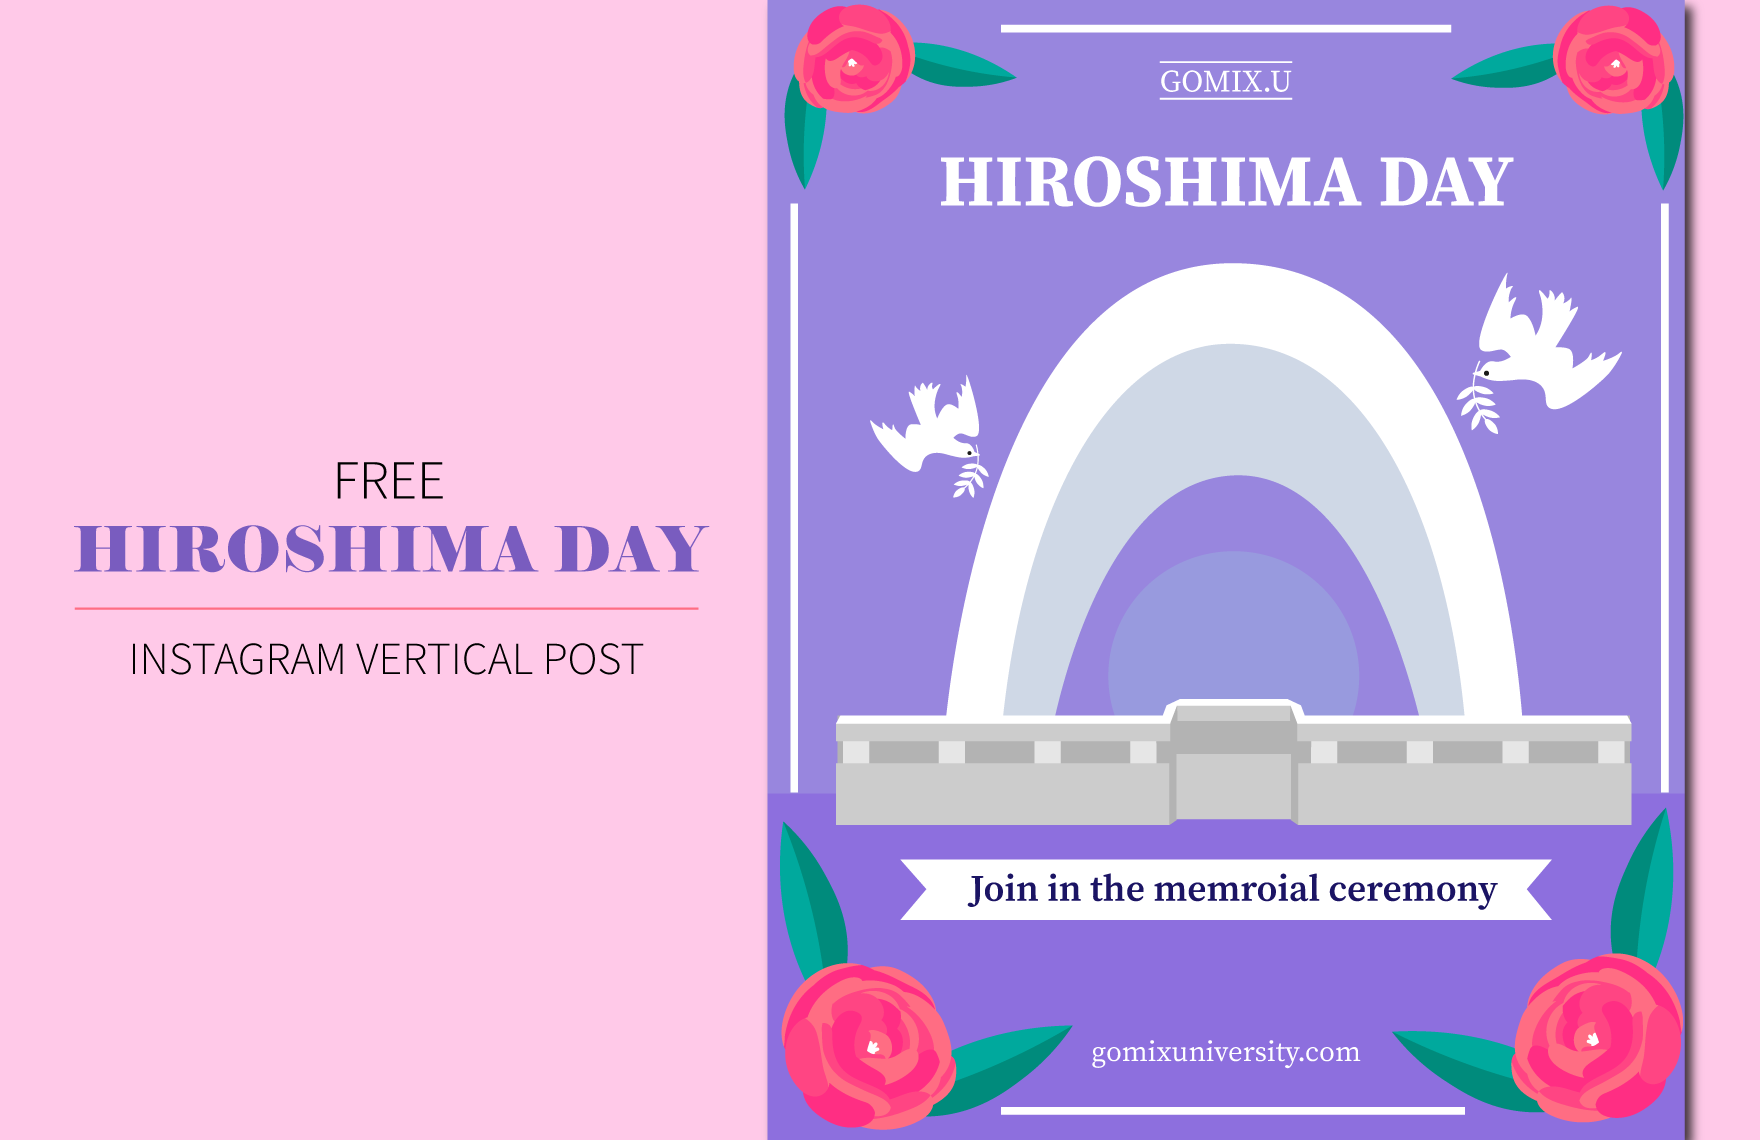 Free Hiroshima Day  Instagram Vertical Post